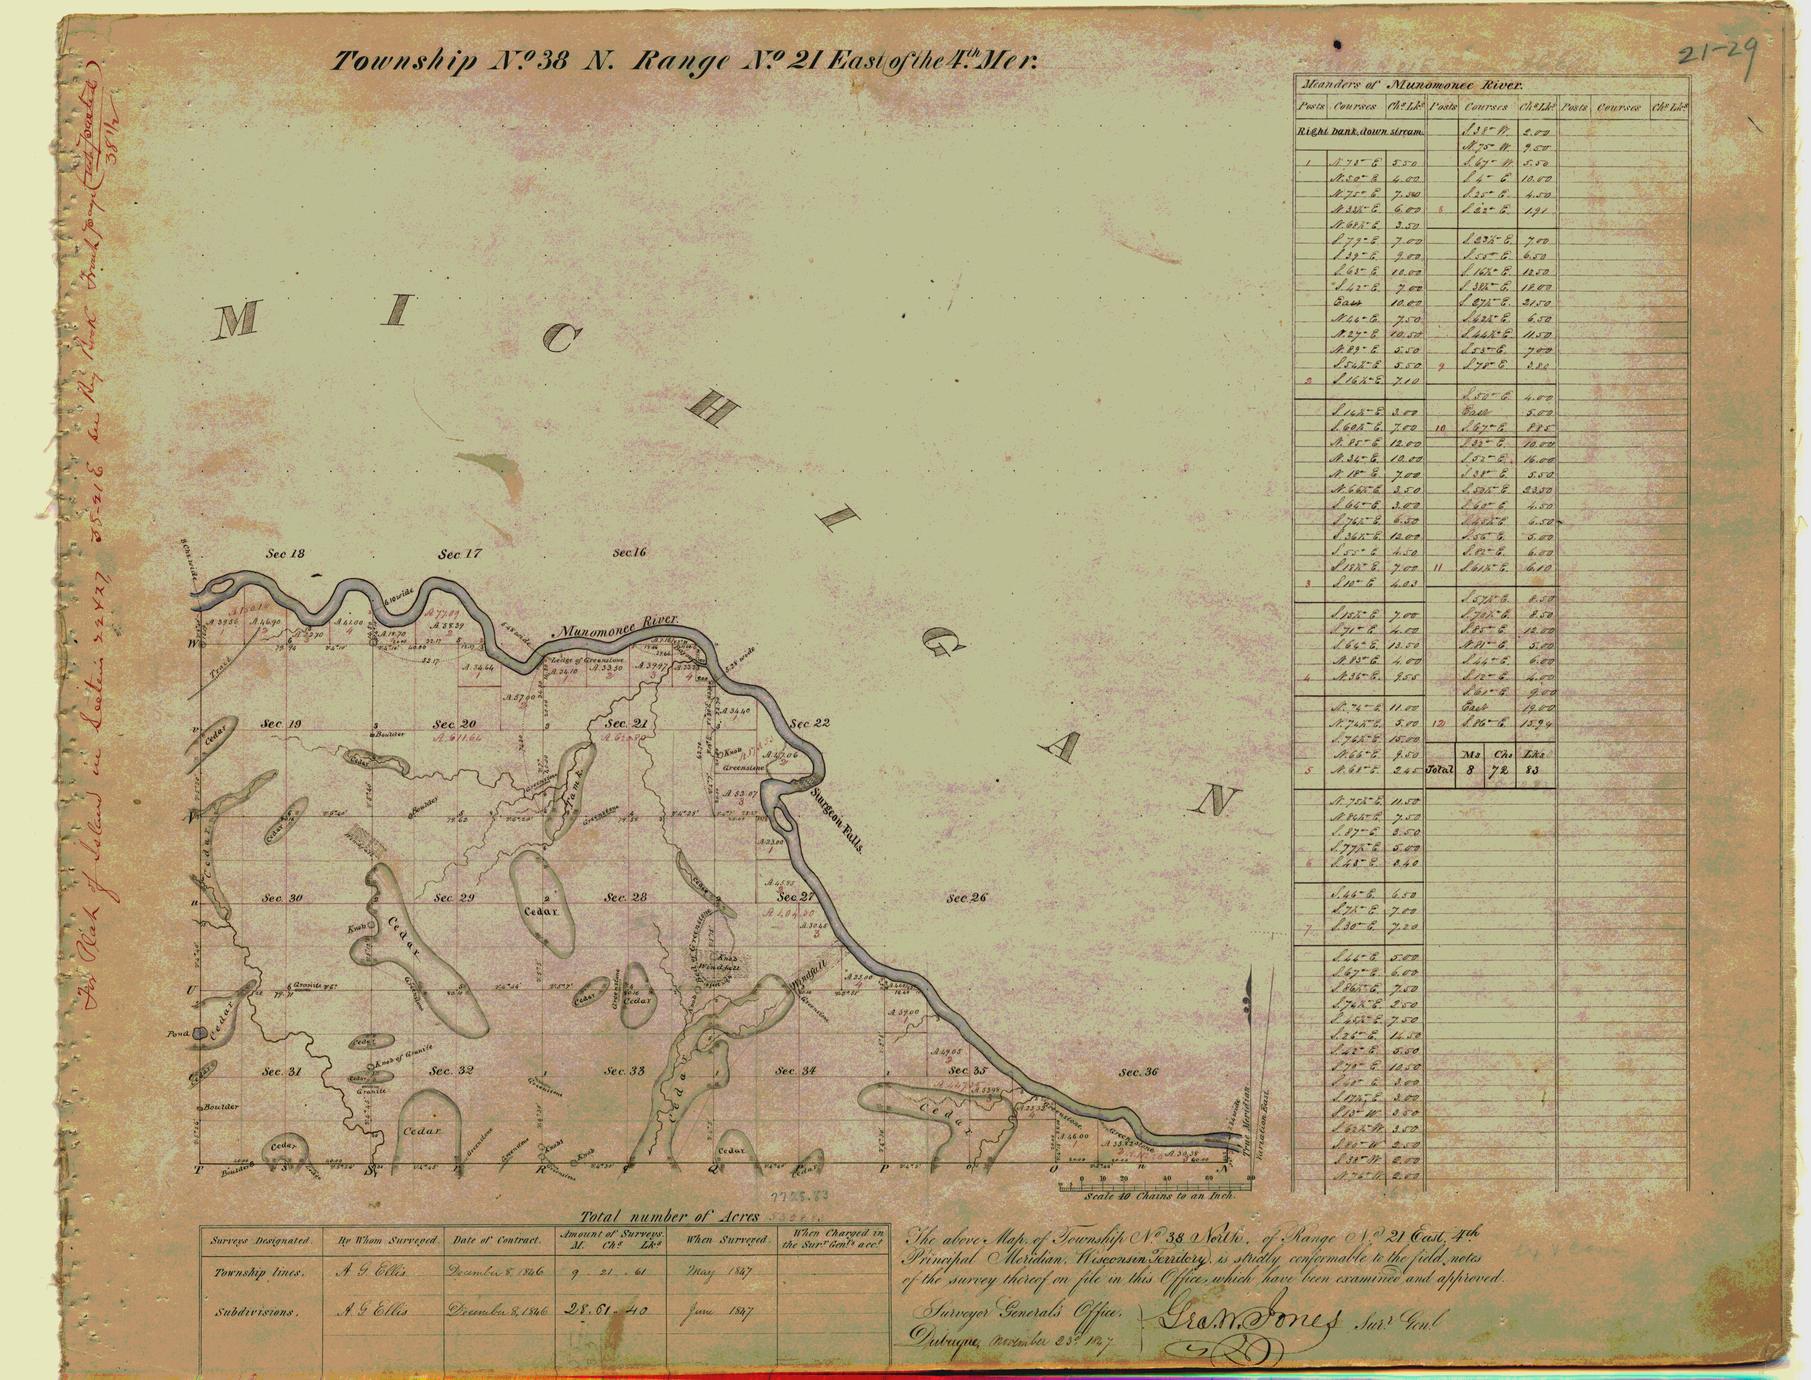 [Public Land Survey System map: Wisconsin Township 38 North, Range 21 East]